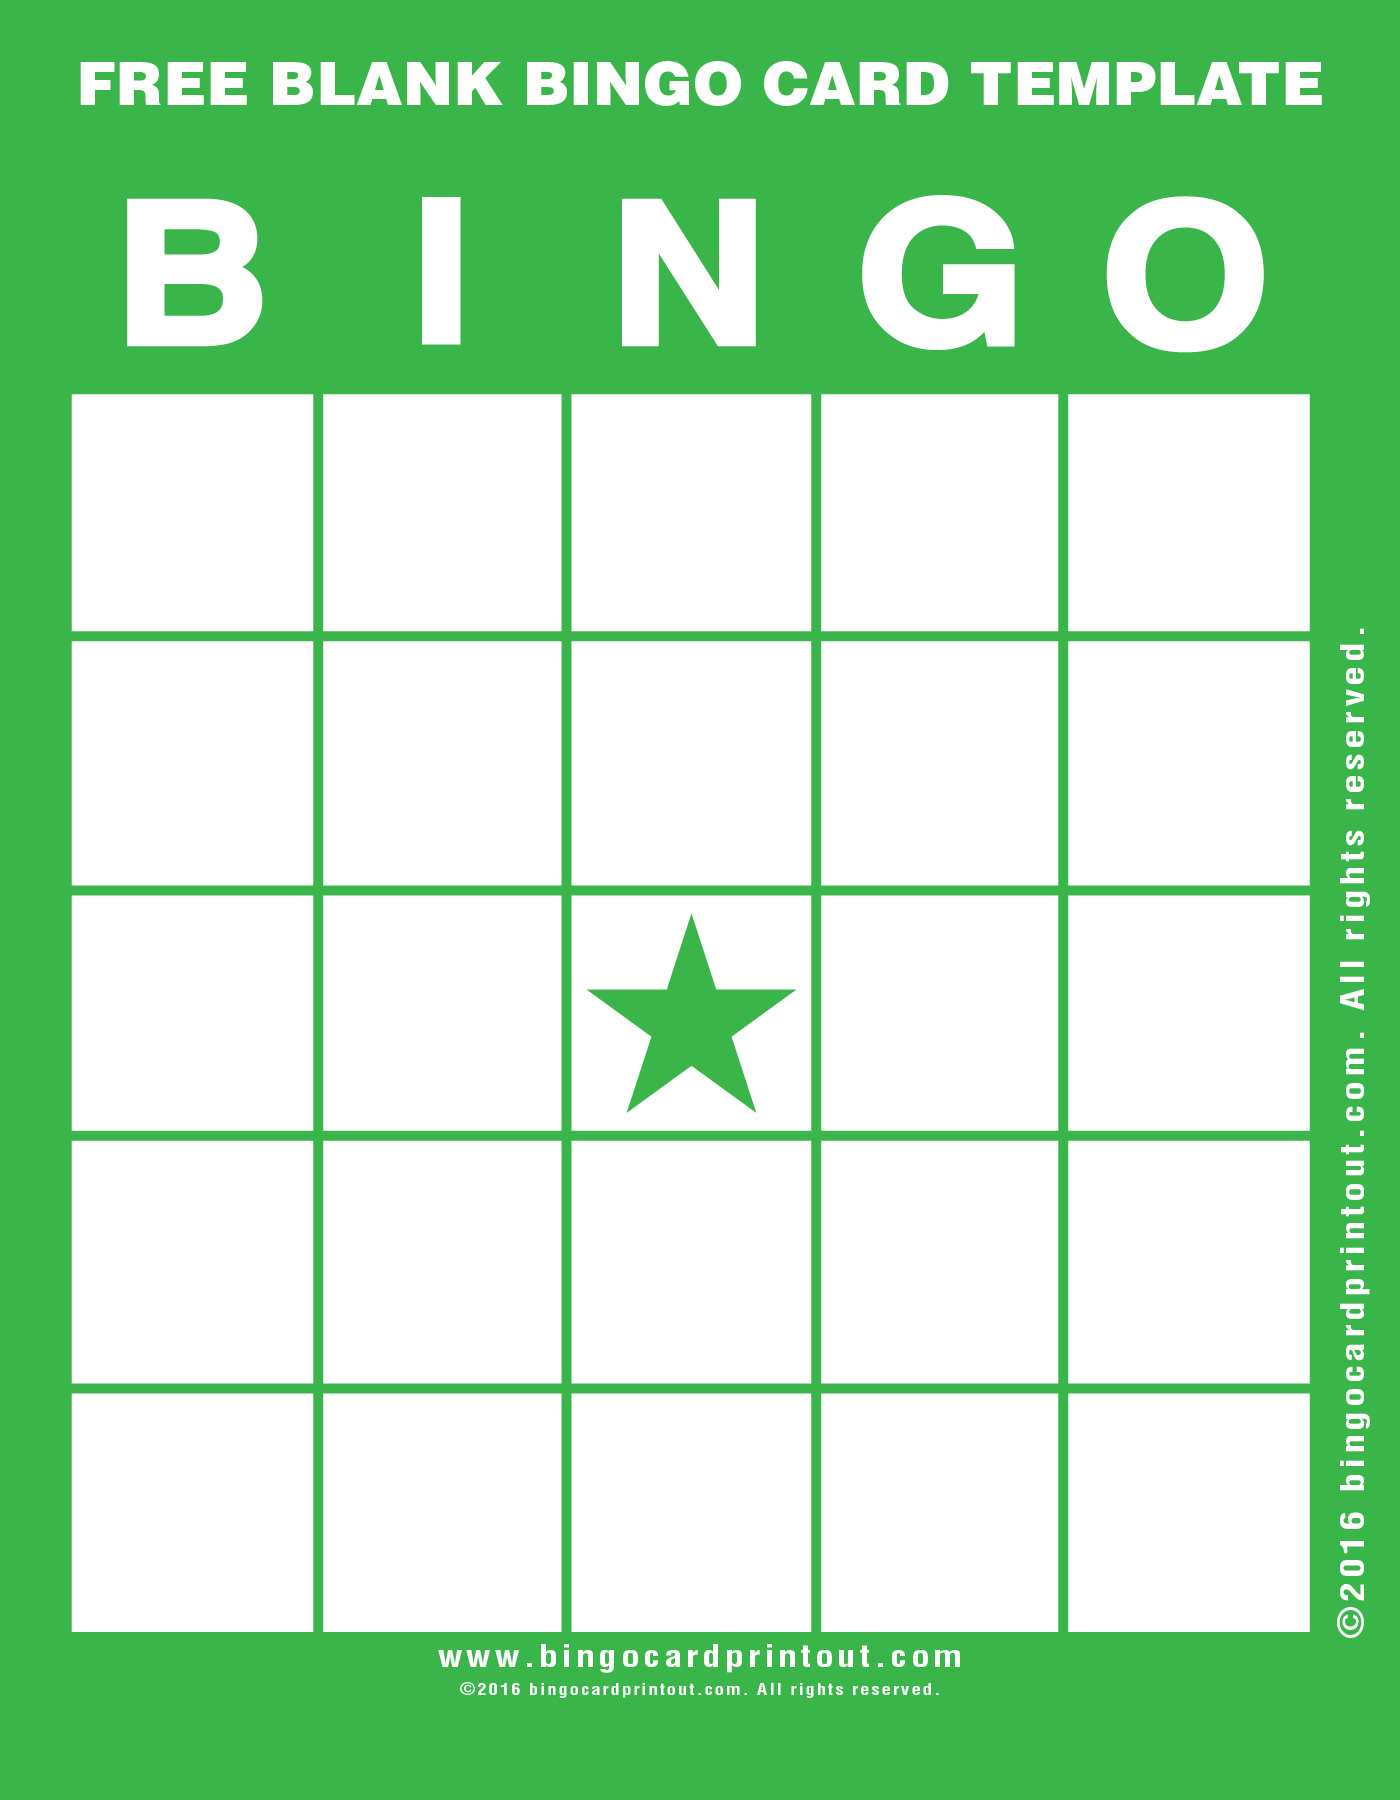 45 Blank Bingo Card Template 5X5 in Photoshop by Bingo Card Template 5X5